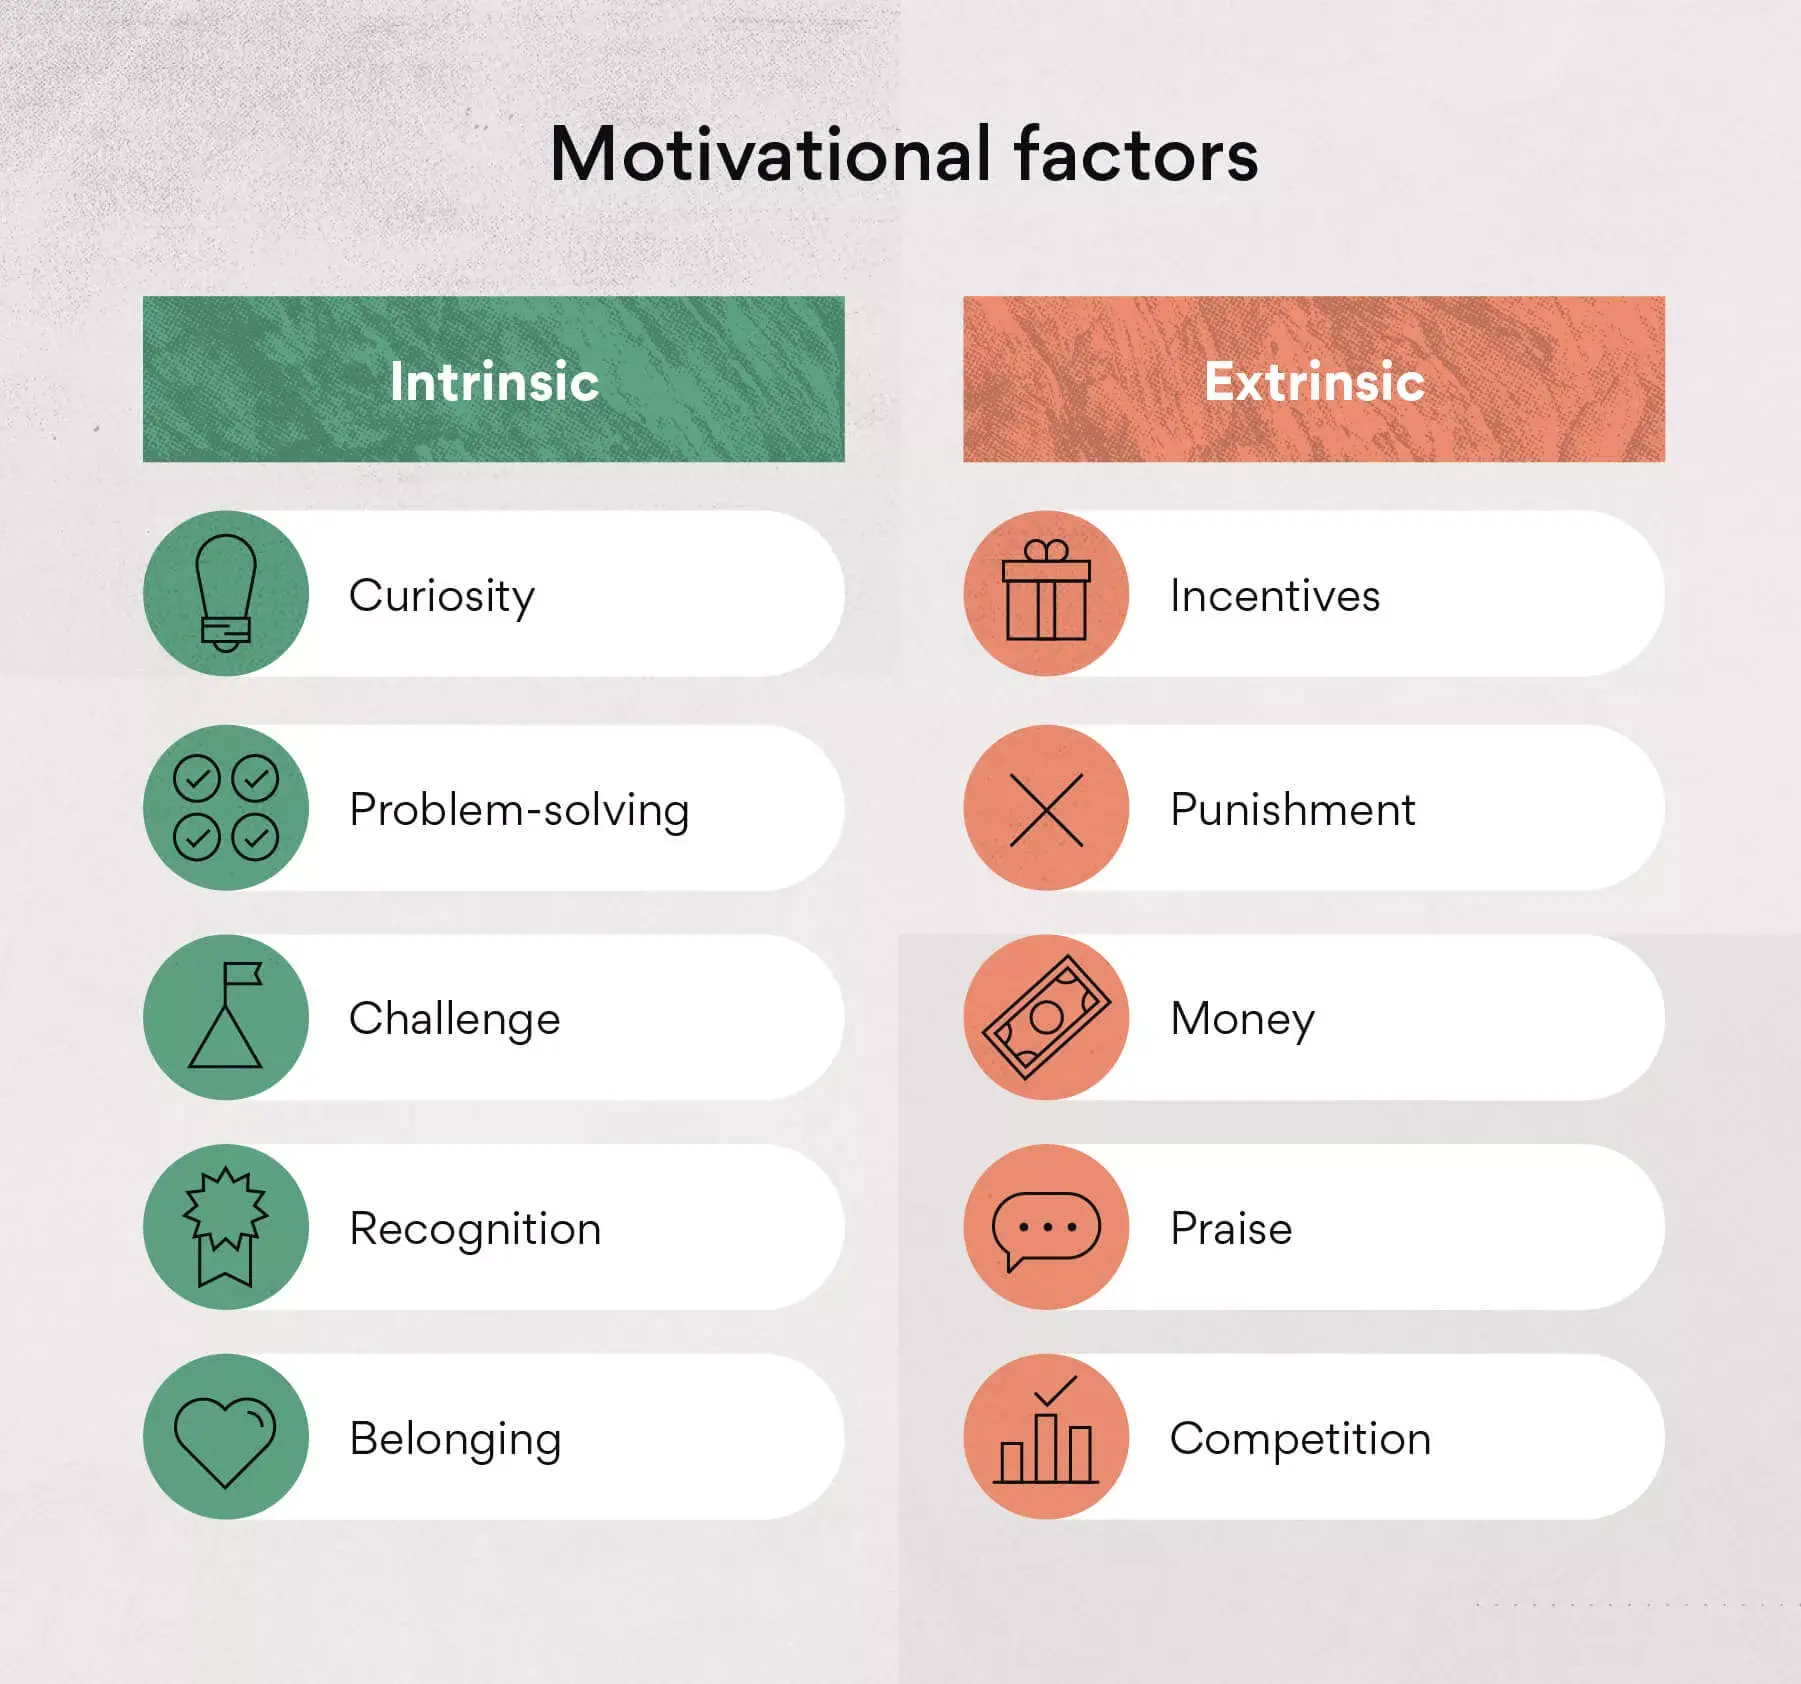 Motivational factors and impact